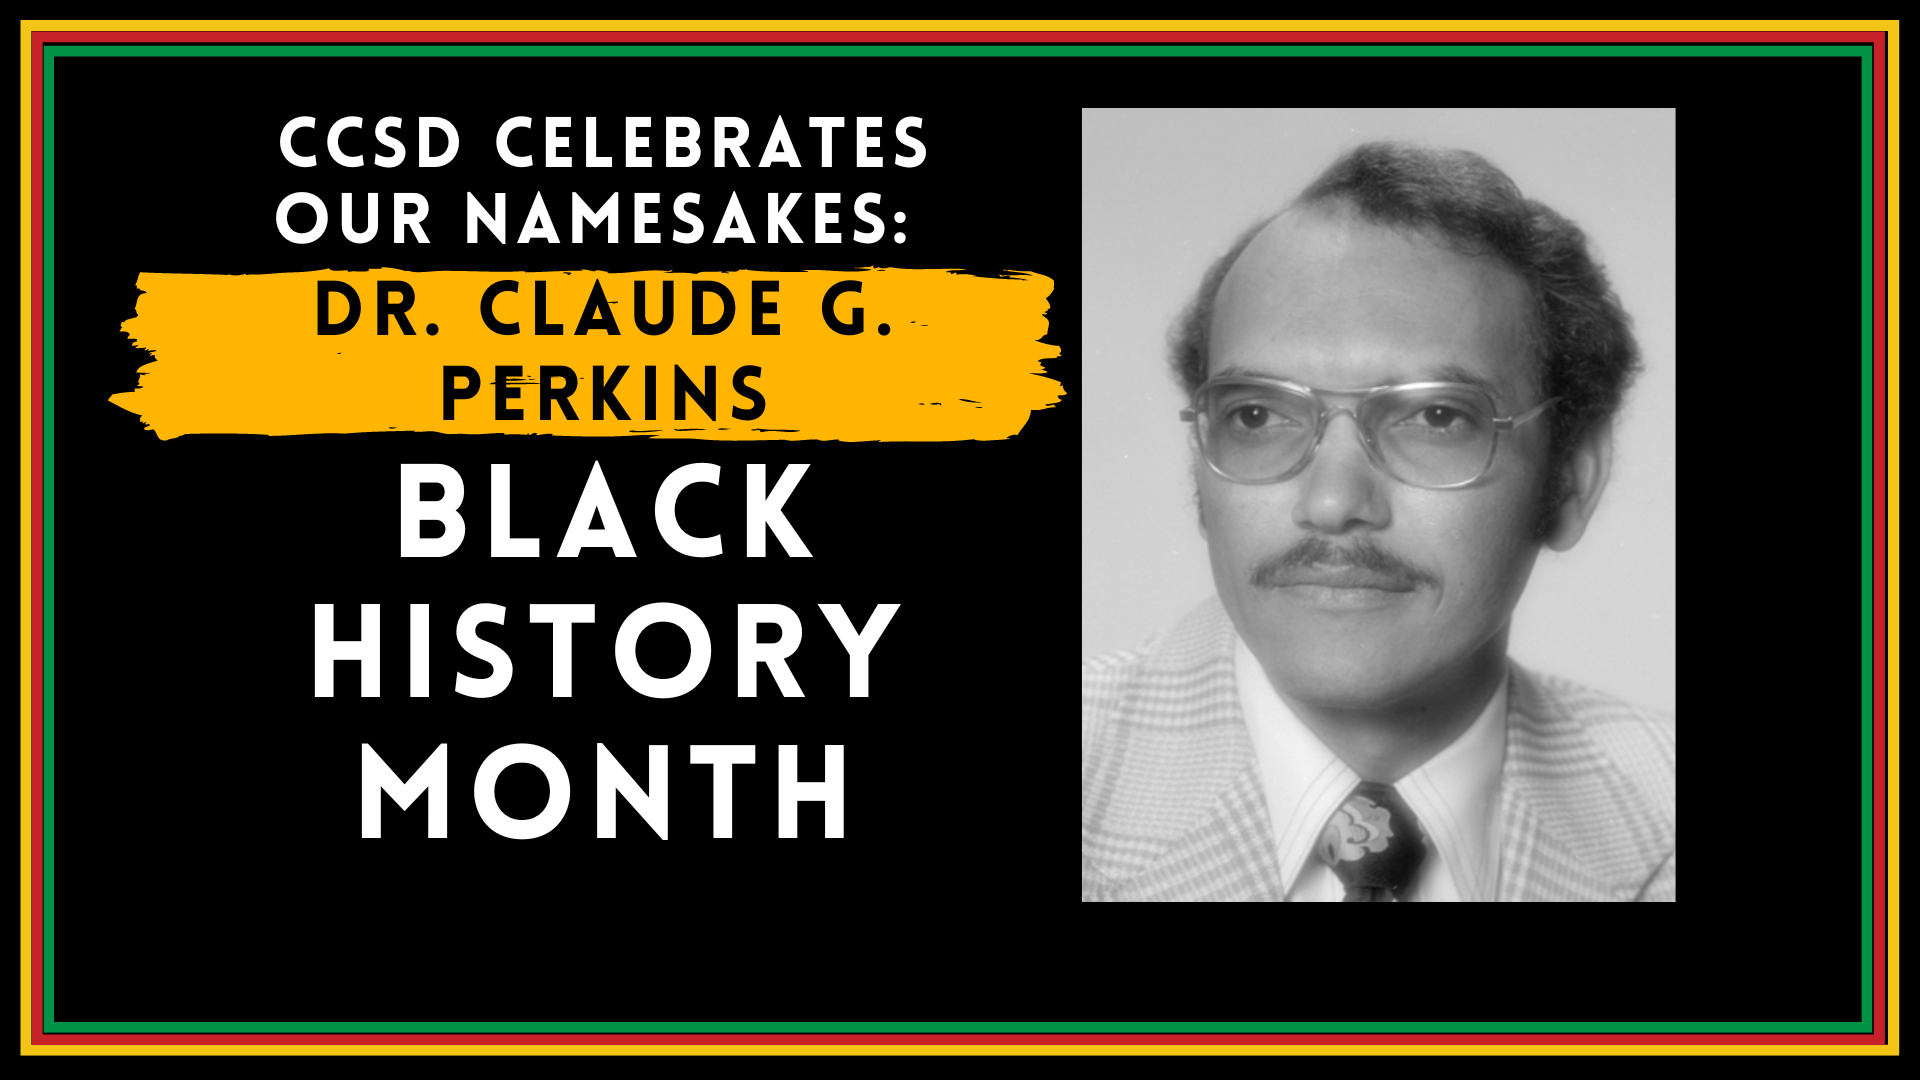 CCSD celebrates its namesakes: Dr. Claude G. Perkins